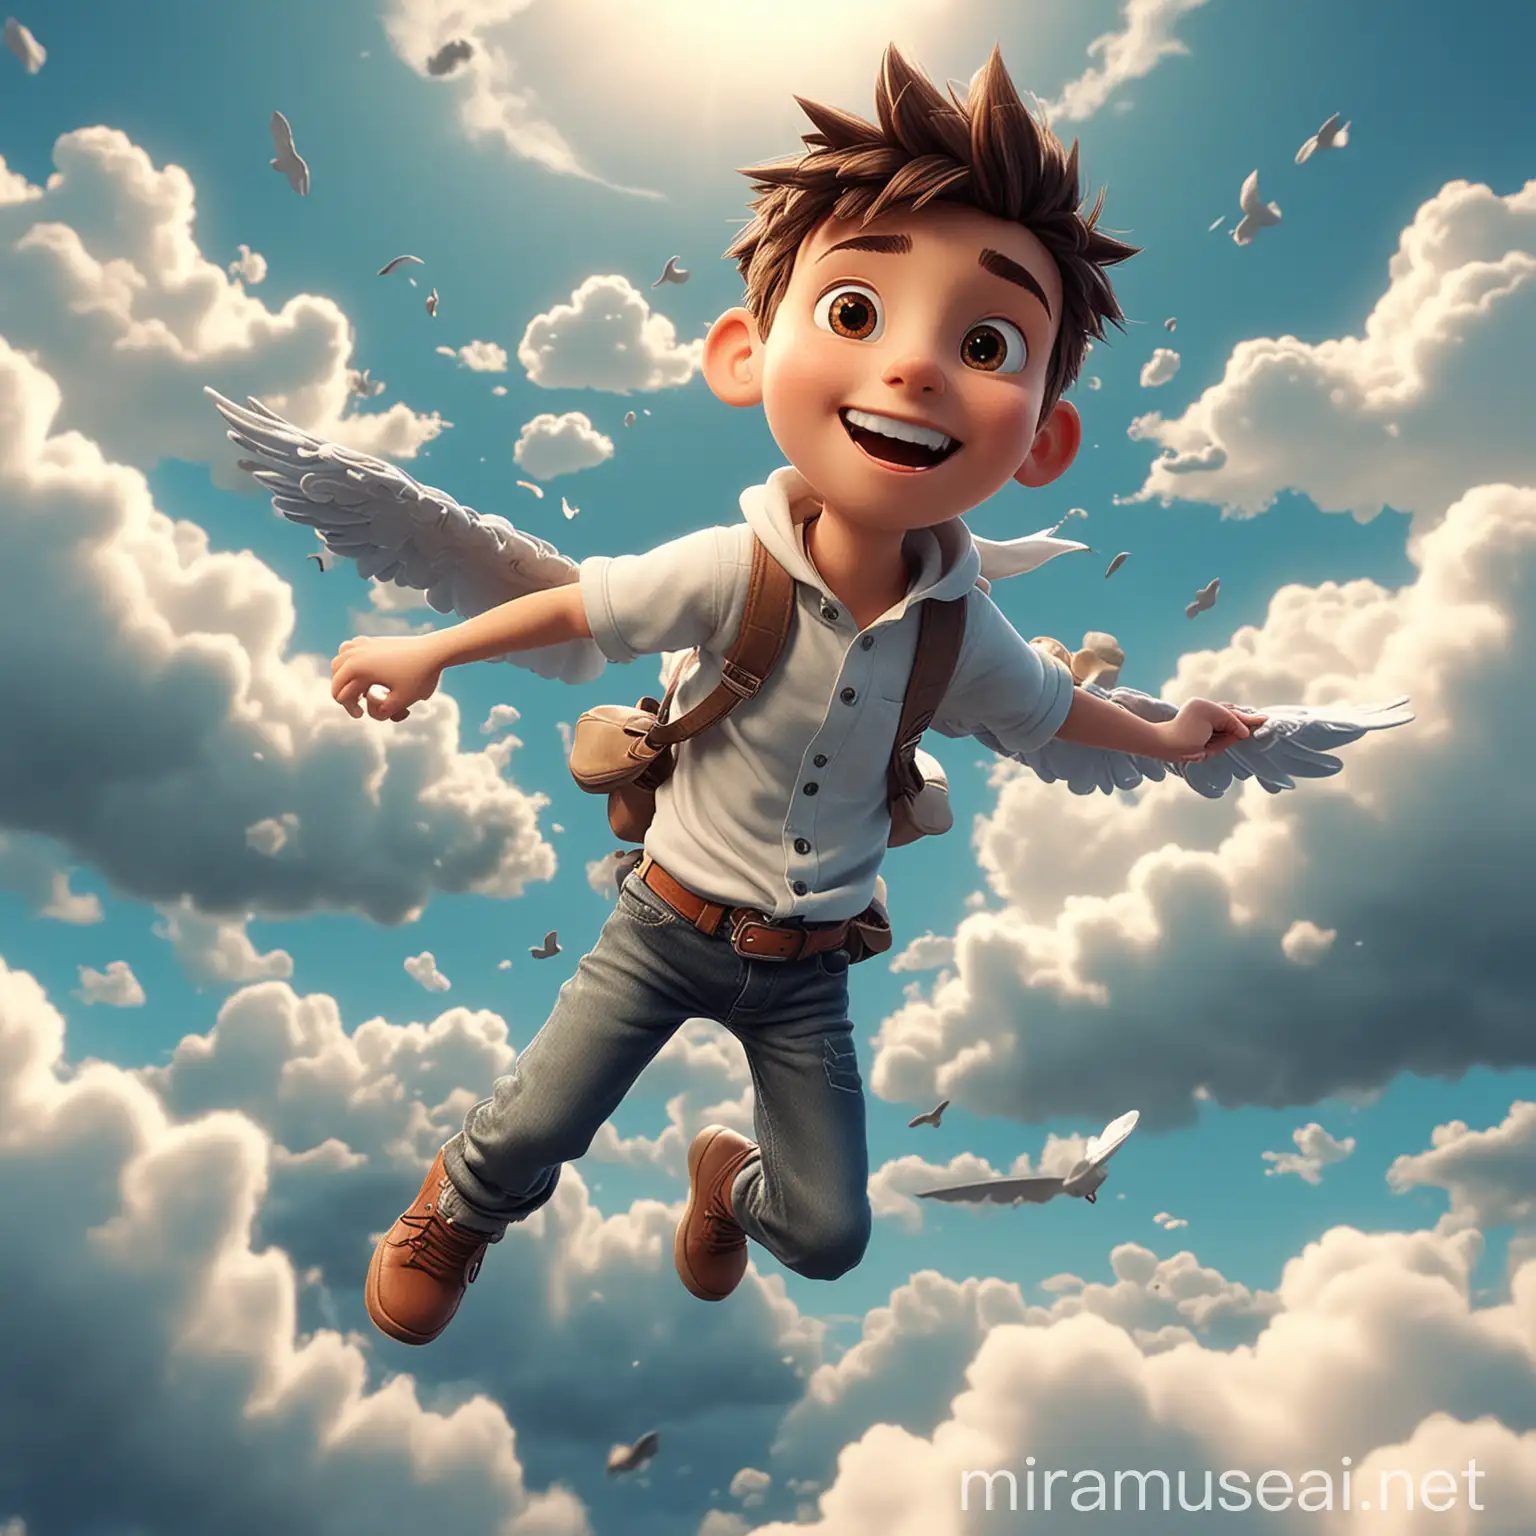 3d cartoon boy
s flying between clouds
